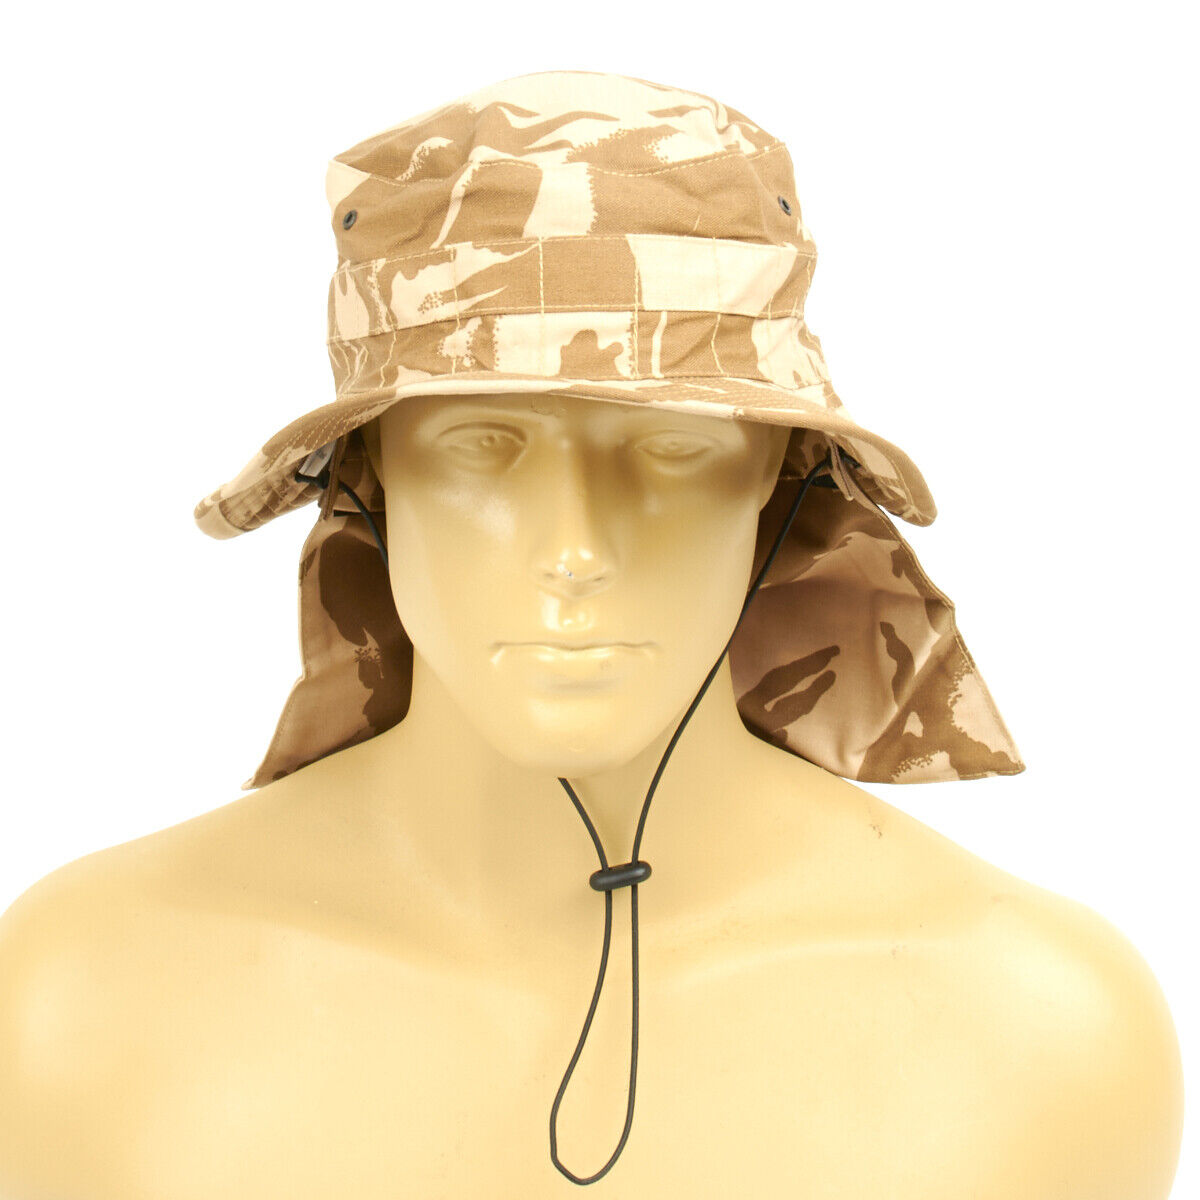 Original British Military Desert Booney Hat with Neck Protector 7.40 US (59cm)